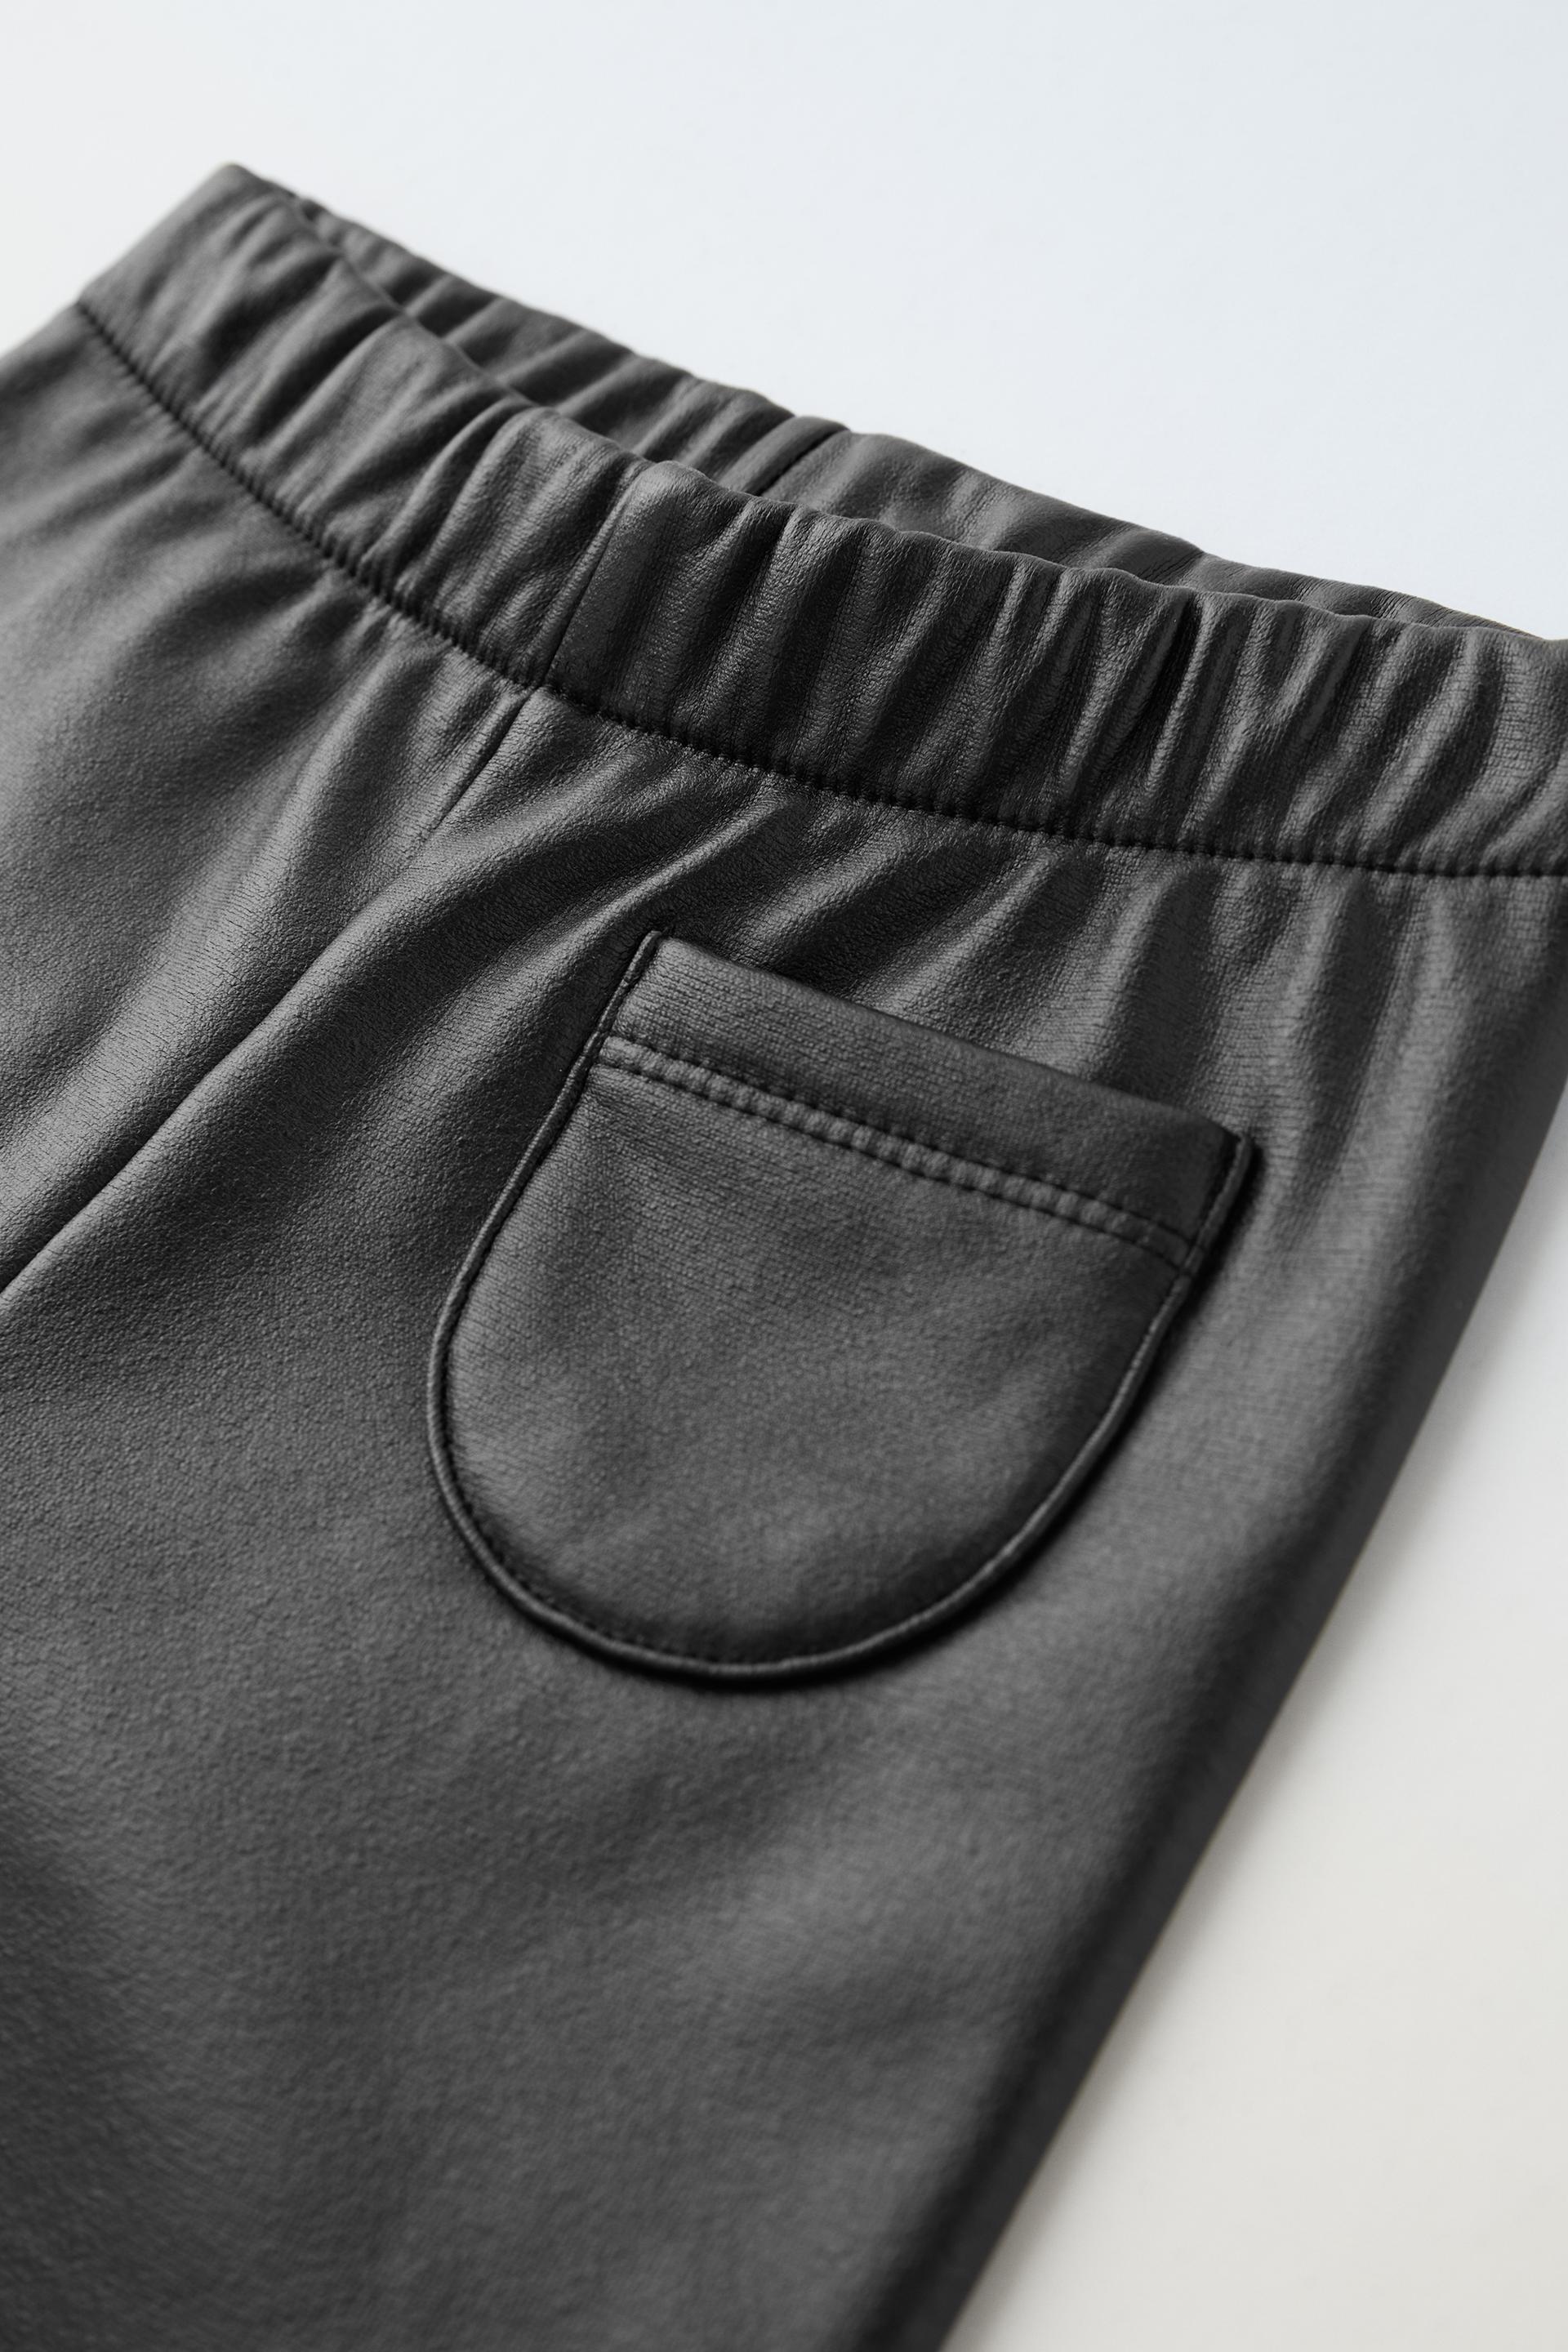 Zara black faux leather leggings UK8 - UK10 – Manifesto Woman